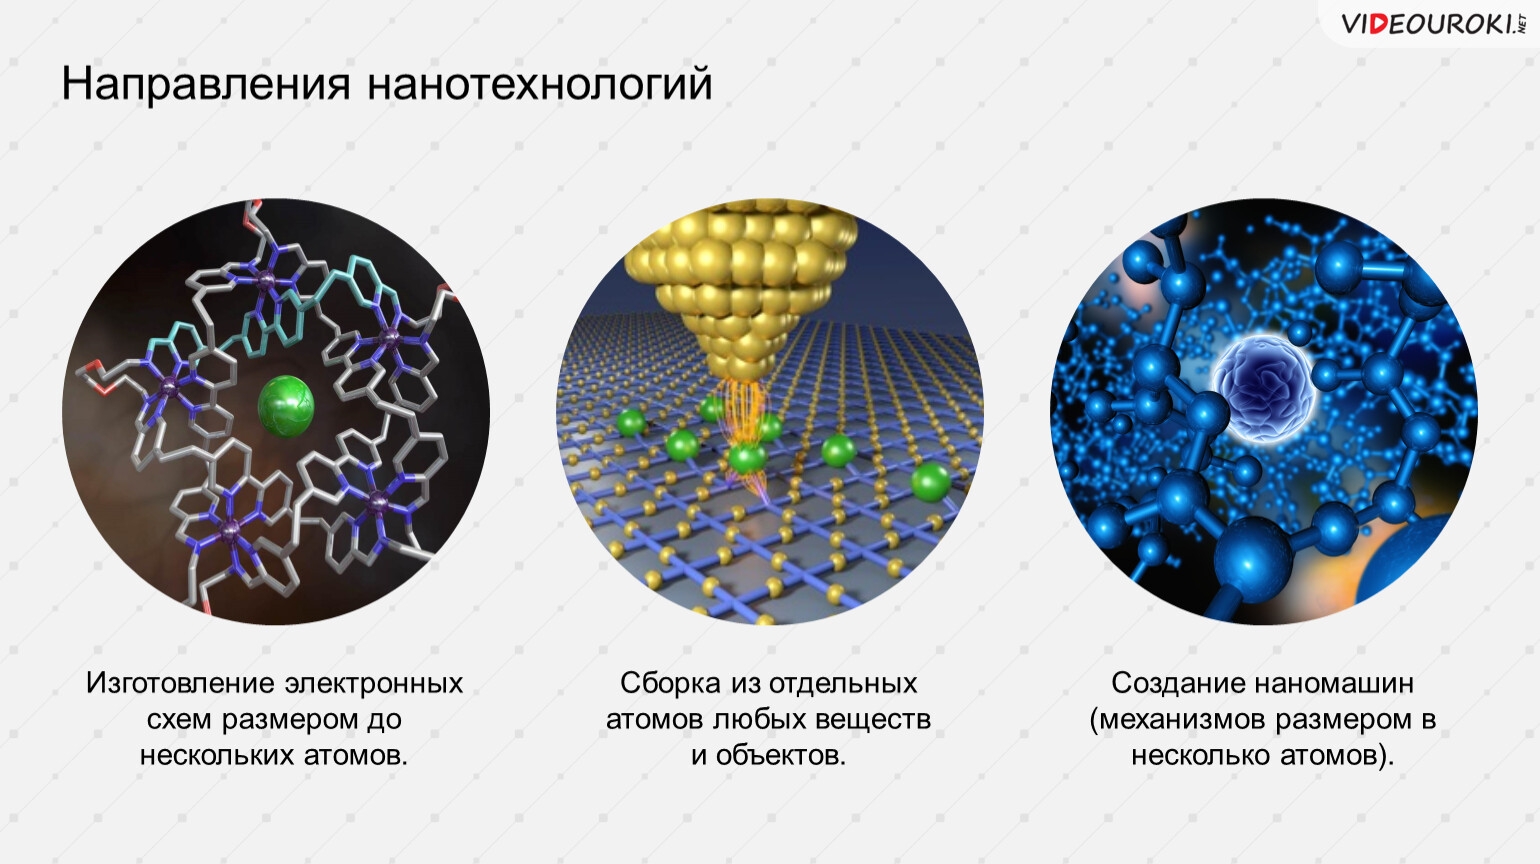 Про нанотехнологии. Направления нанотехнологий. Нанотехнологии схема. Нанотехнологии презентация. Основные направления нанотехнологии.